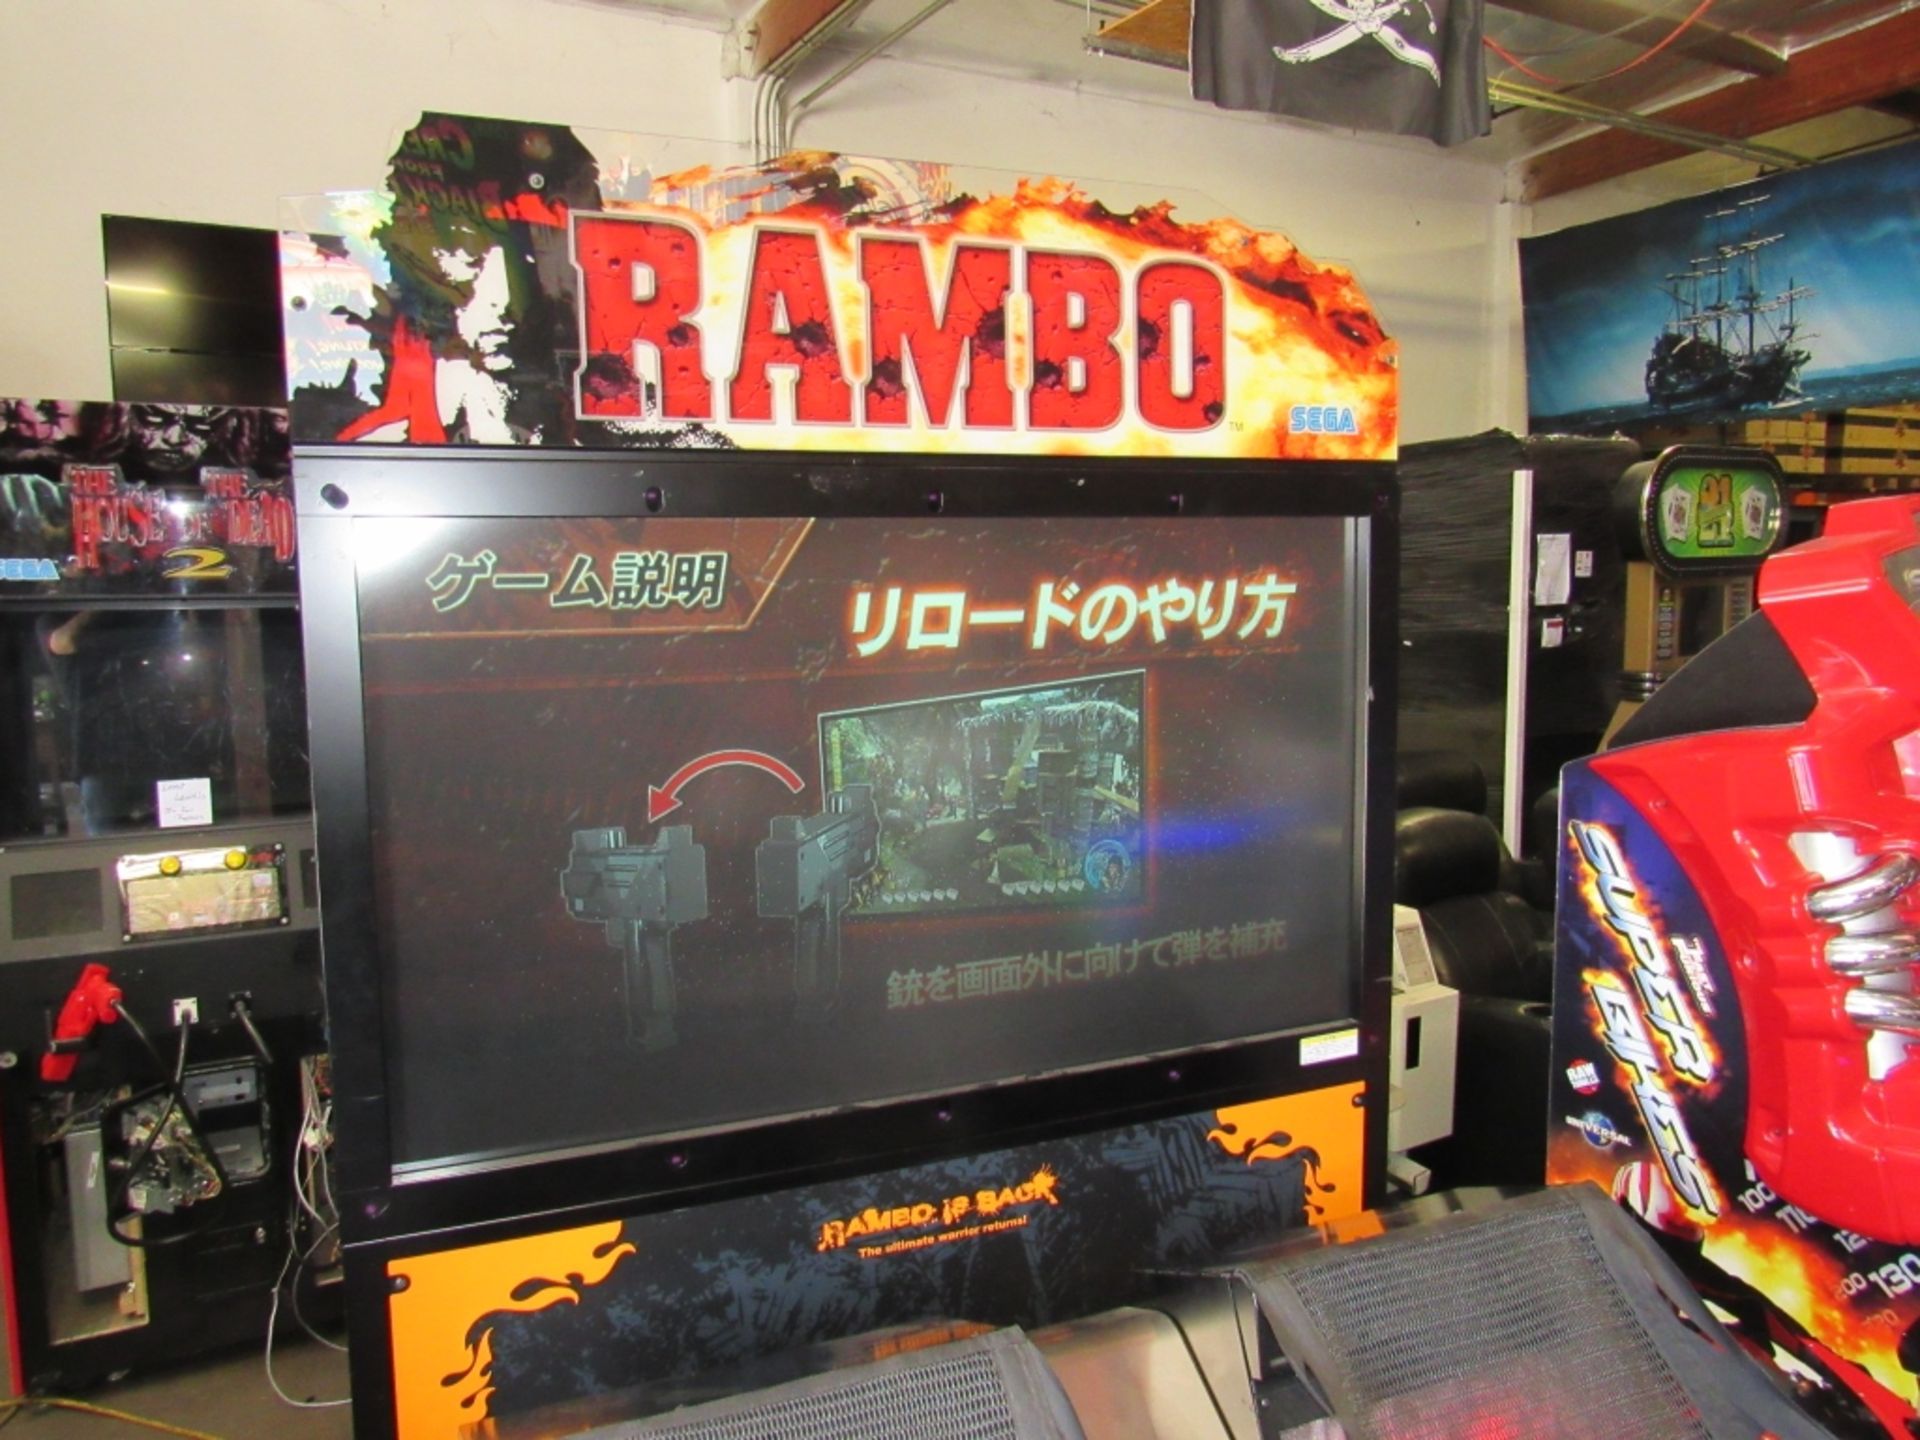 RAMBO DELUXE 50"" SHOOTER ARCADE GAME SEGA - Image 3 of 9